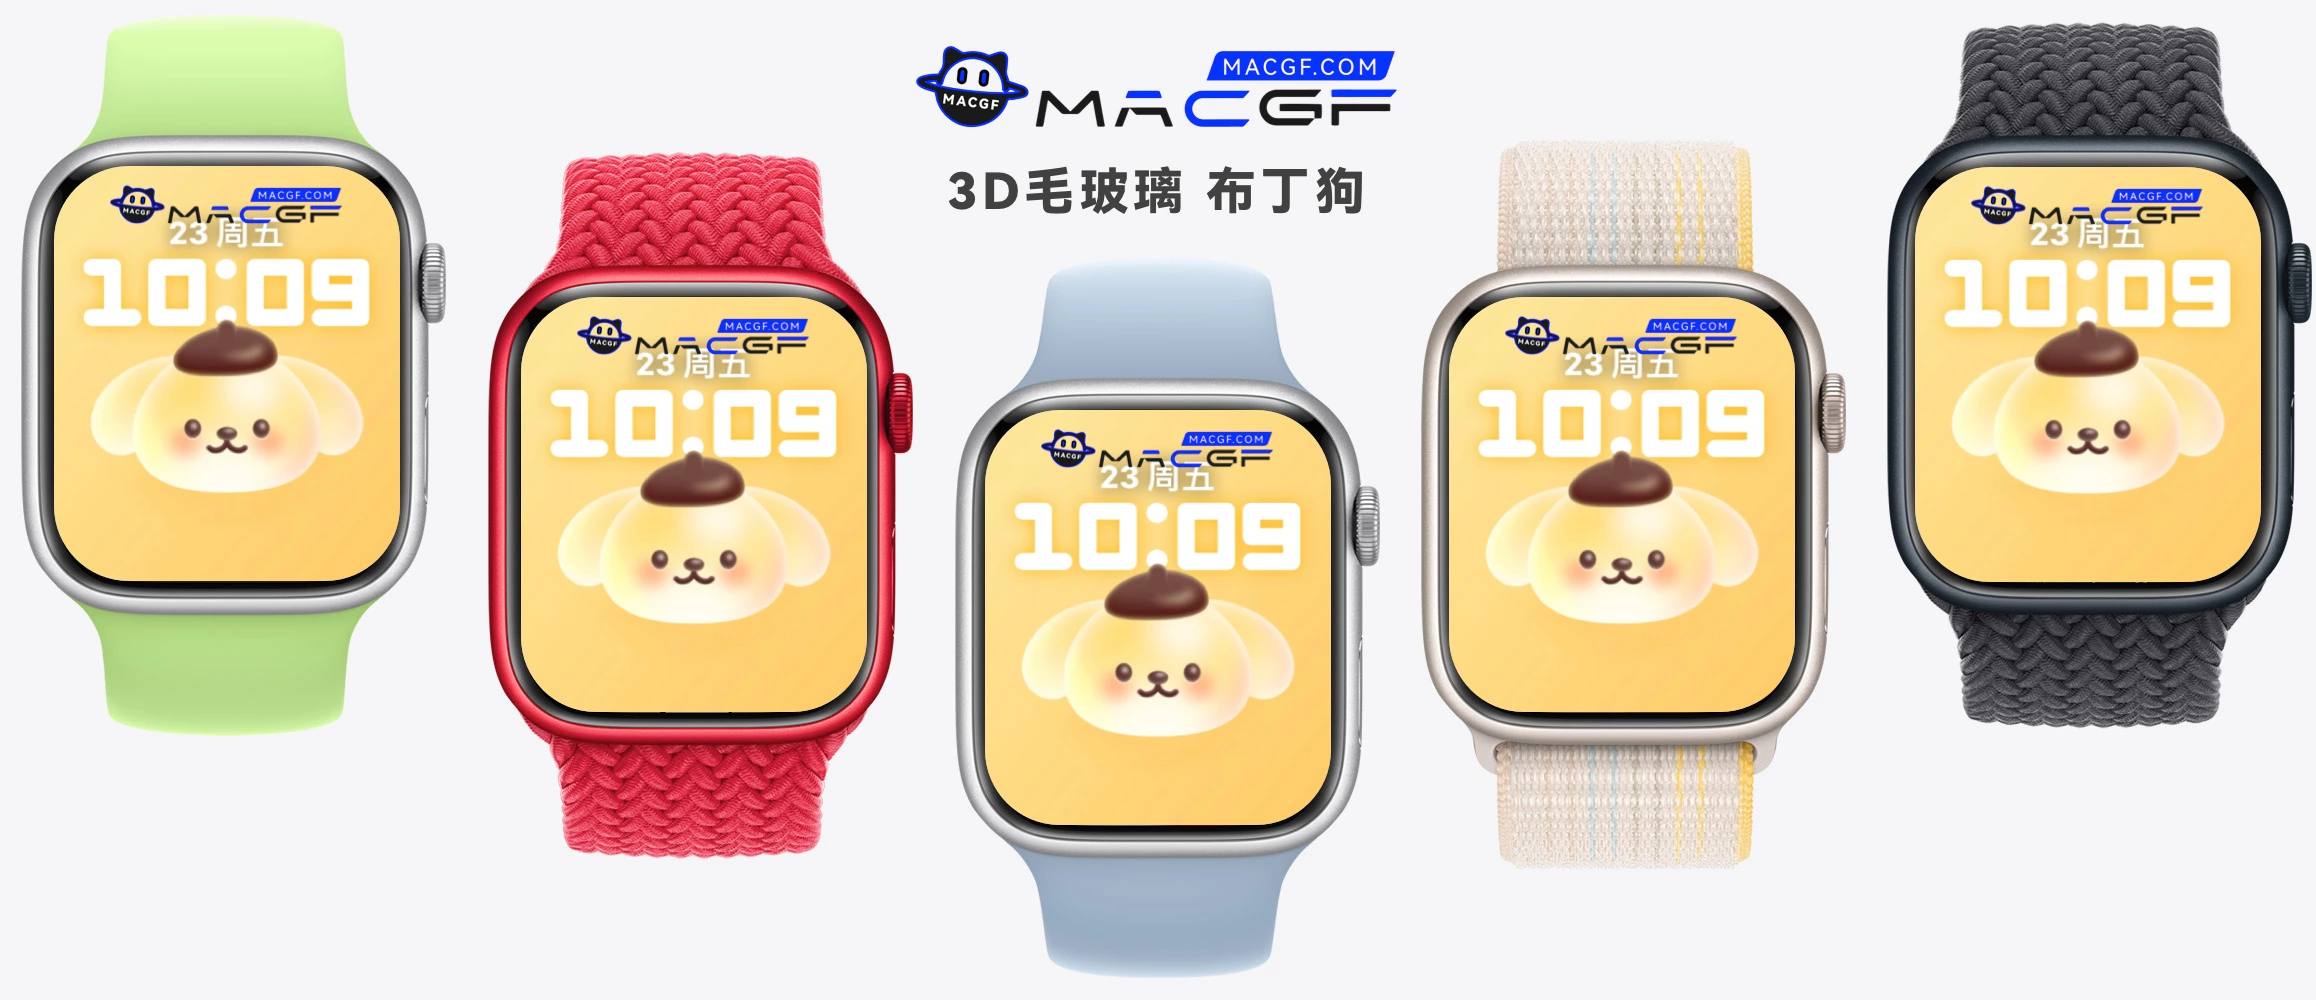 3D毛玻璃 布丁狗 Apple watch 精美原生表盘 - macGF